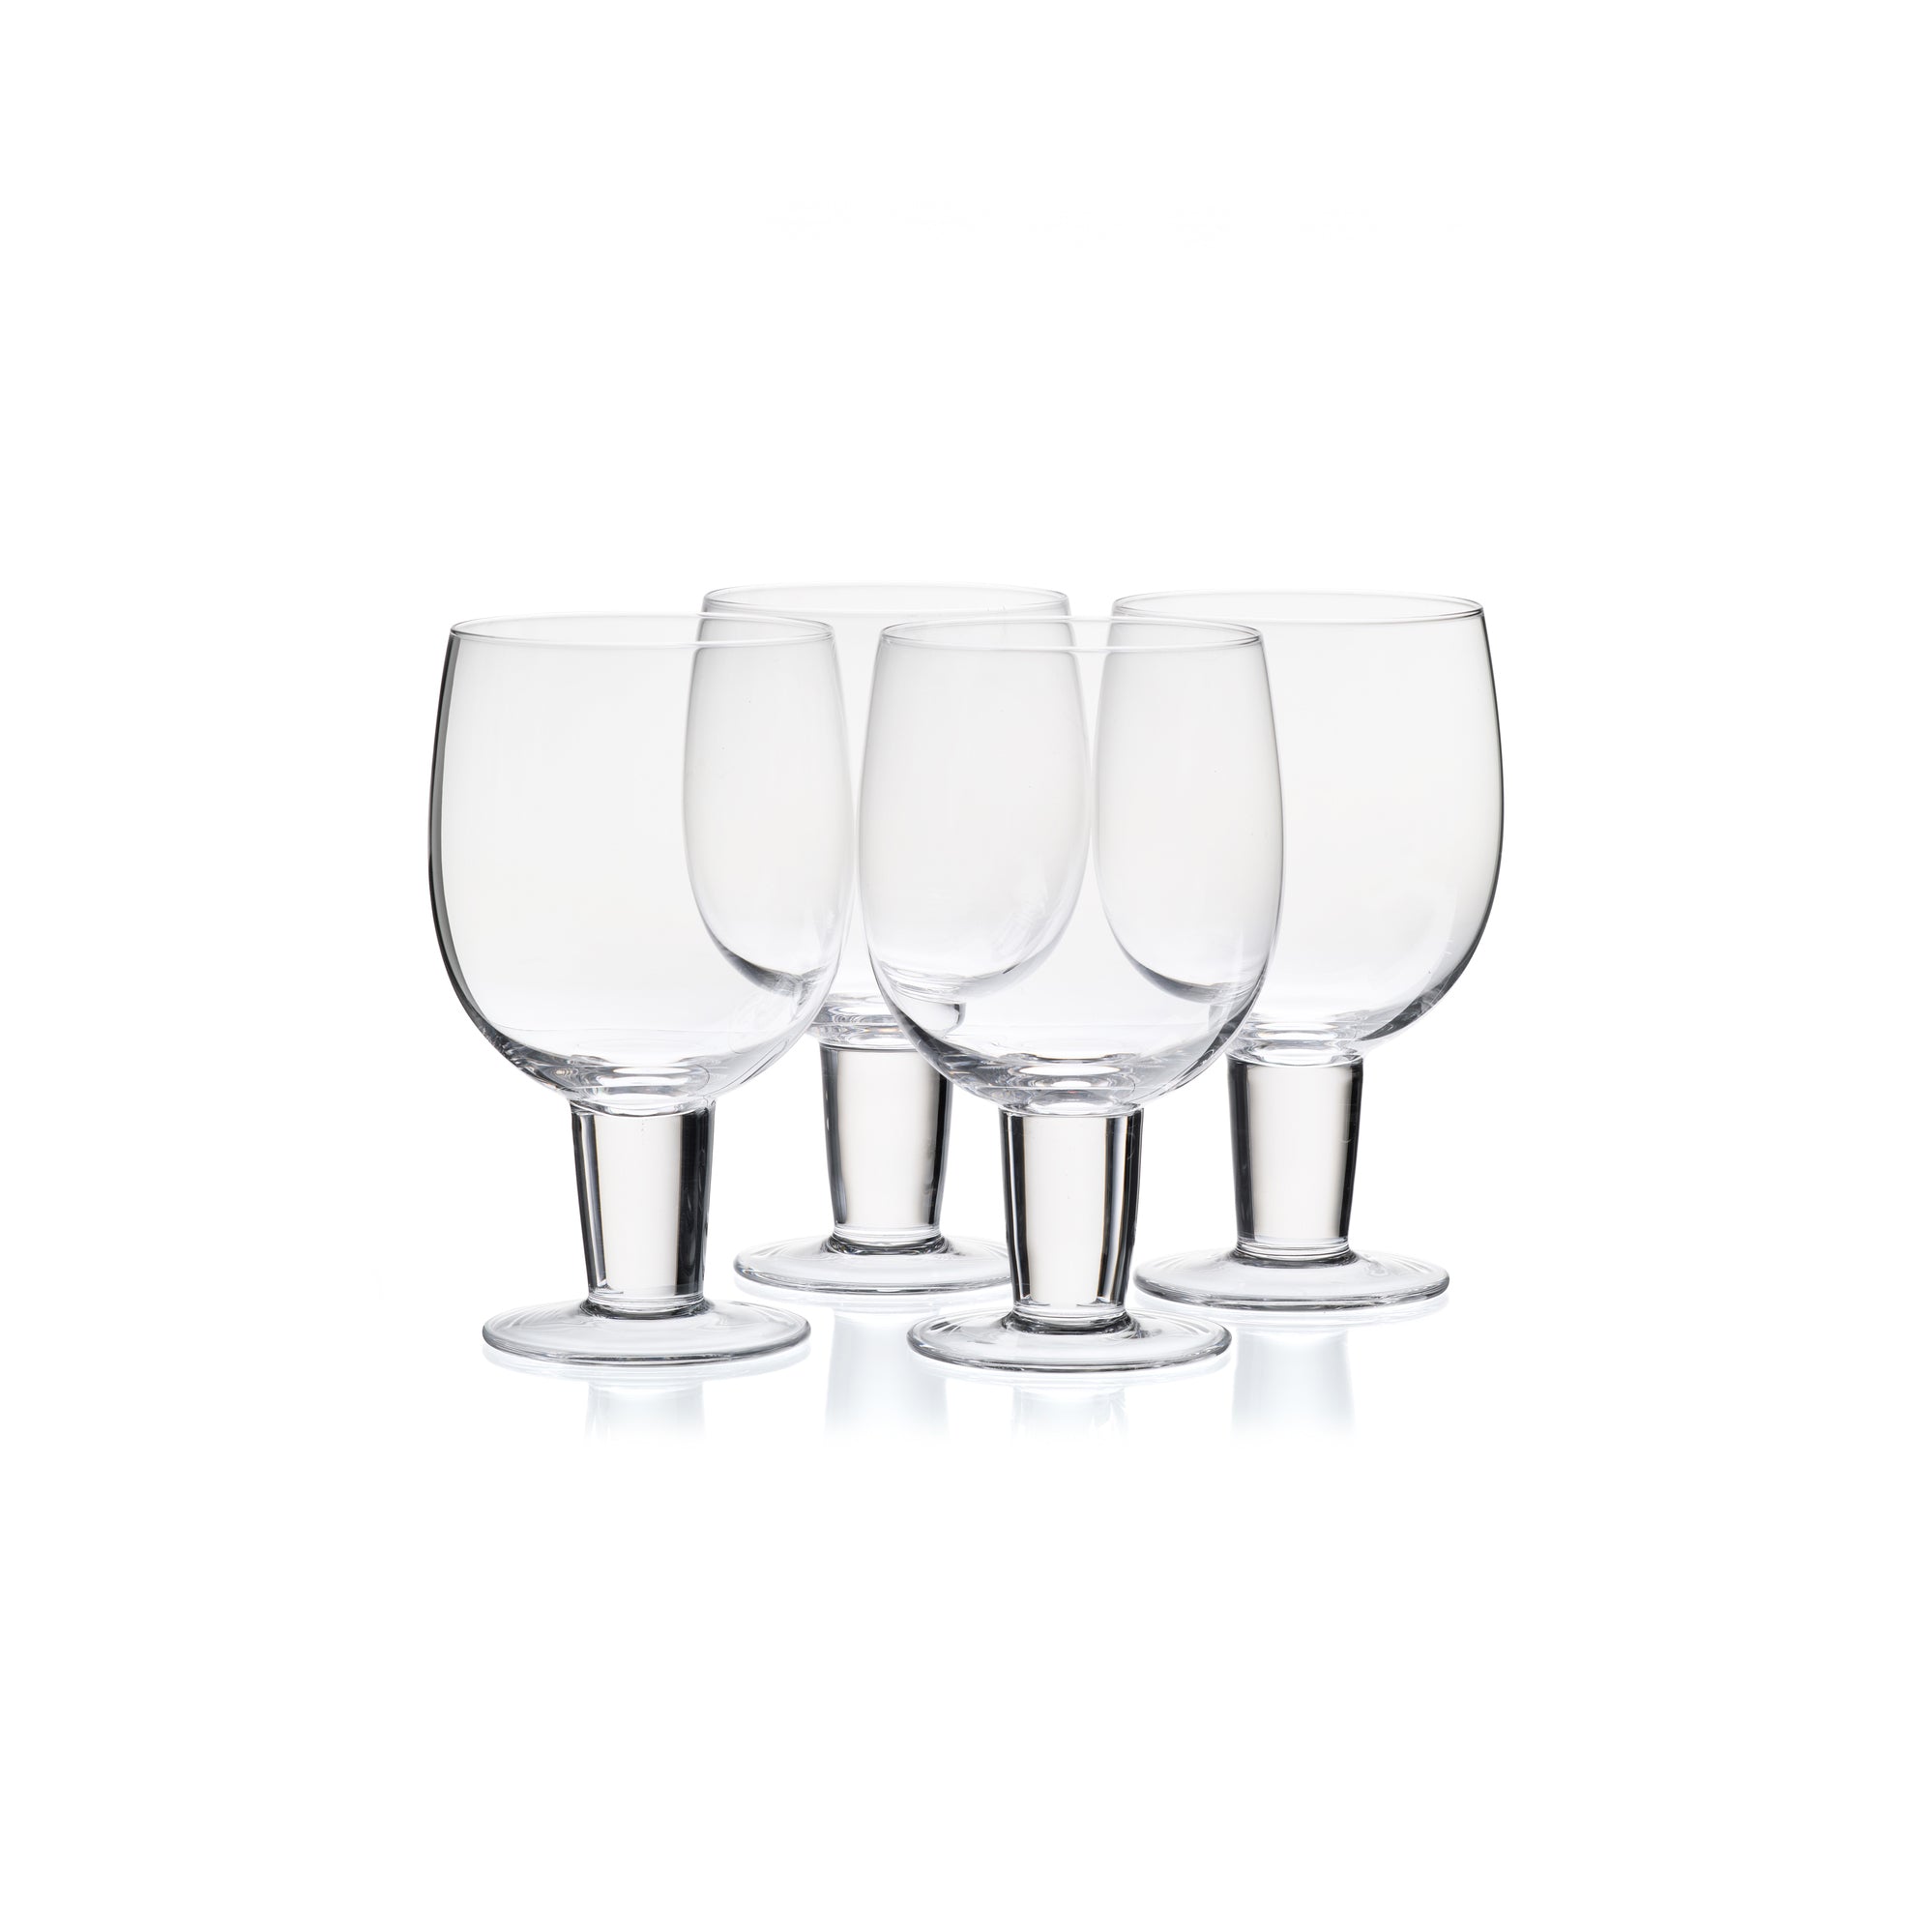 glass carafe, 4 glasses